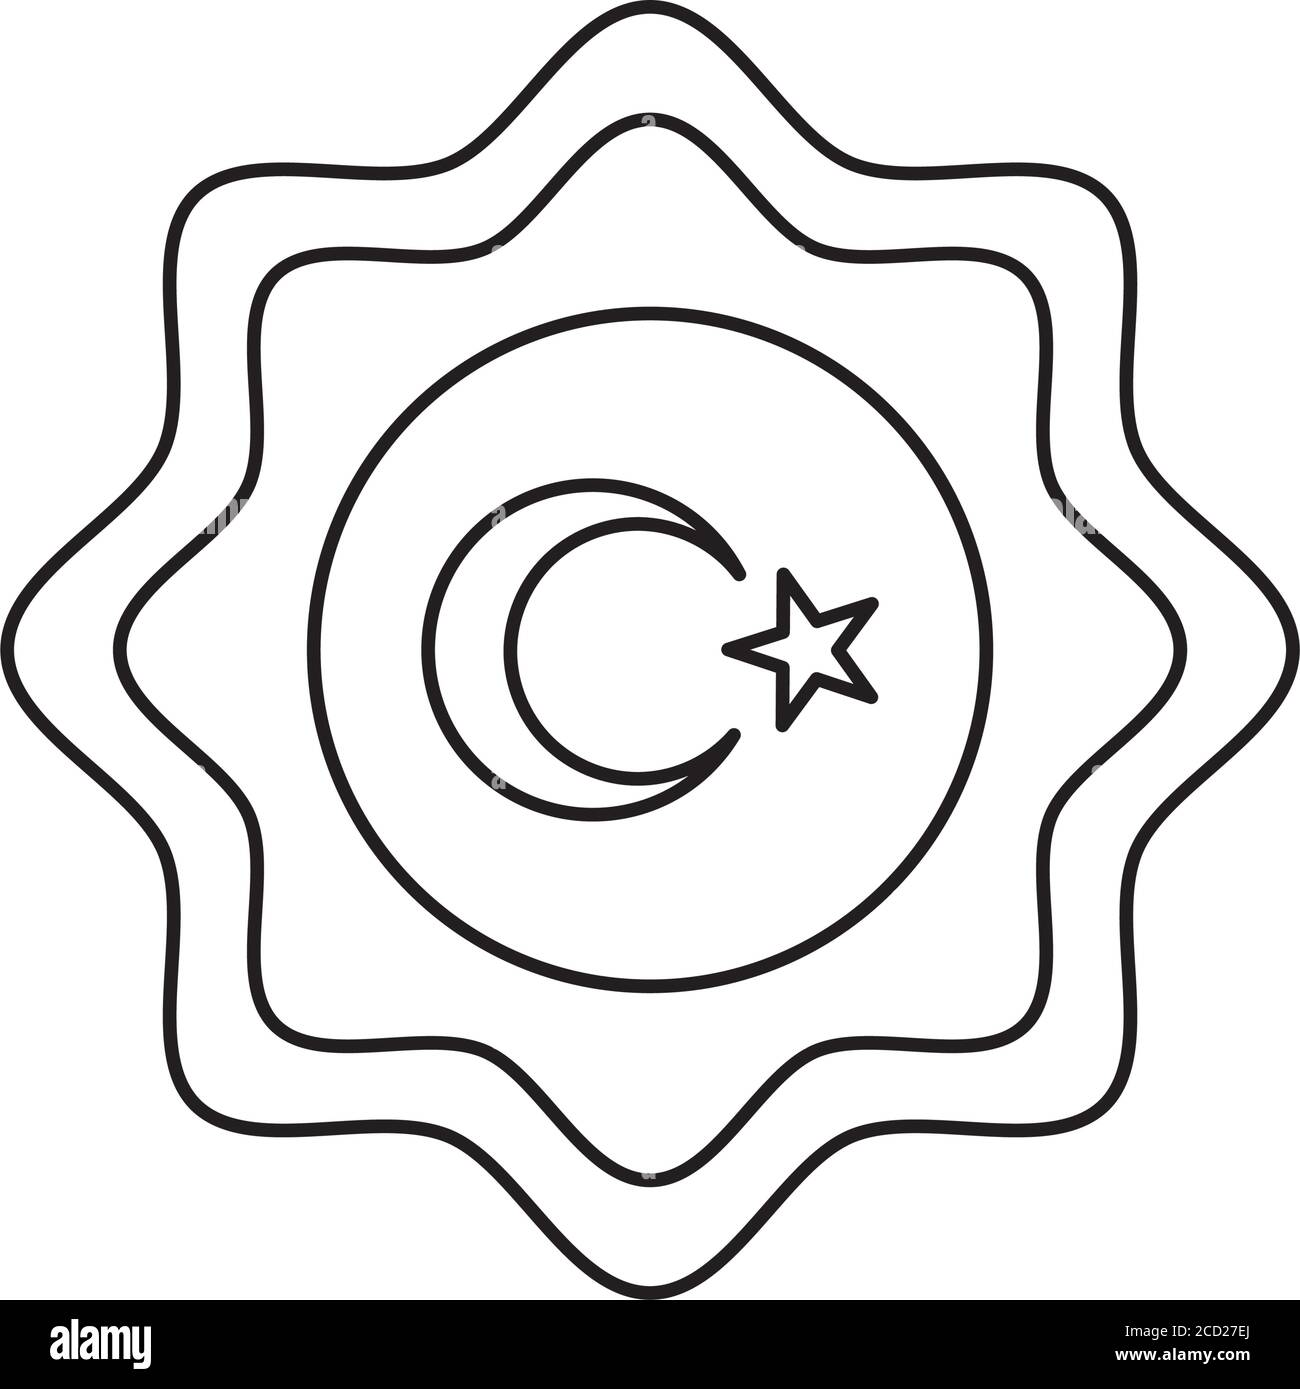 arabian star with turkey flag design over white background, line style, vector illustration Stock Vector